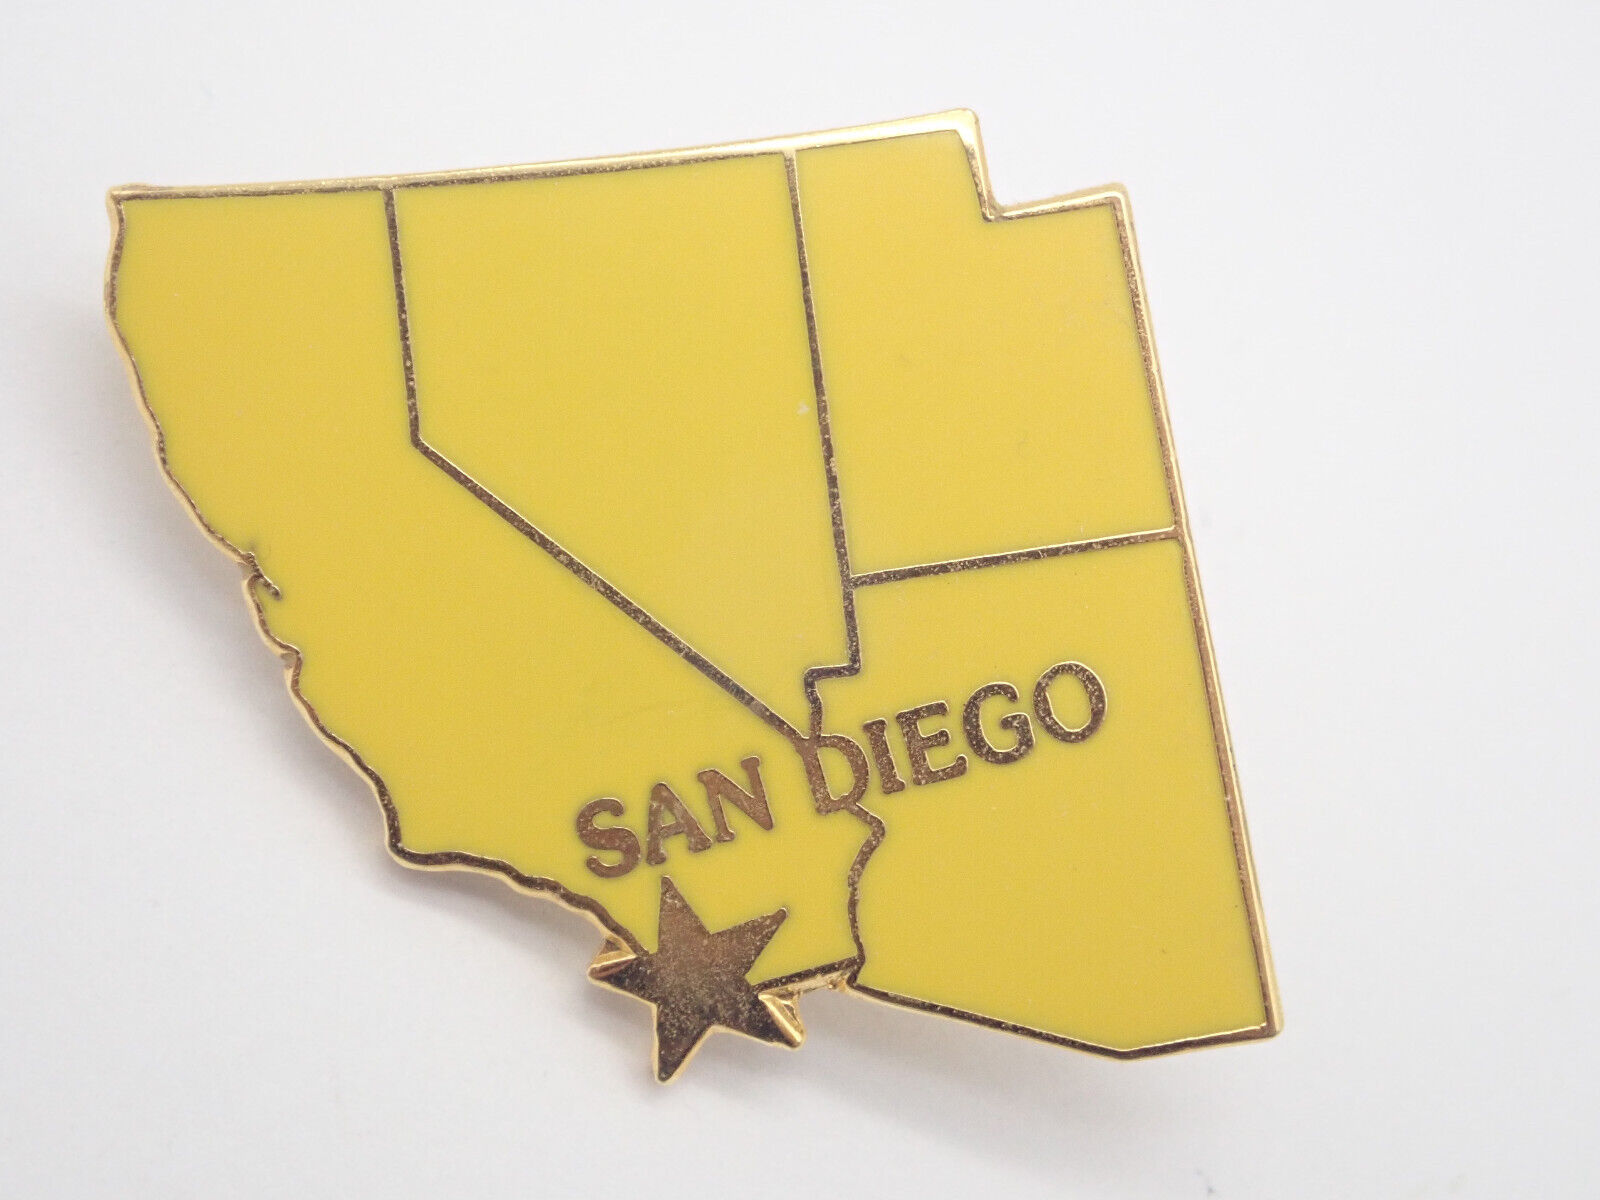 San Diego California Vintage Lapel Pin